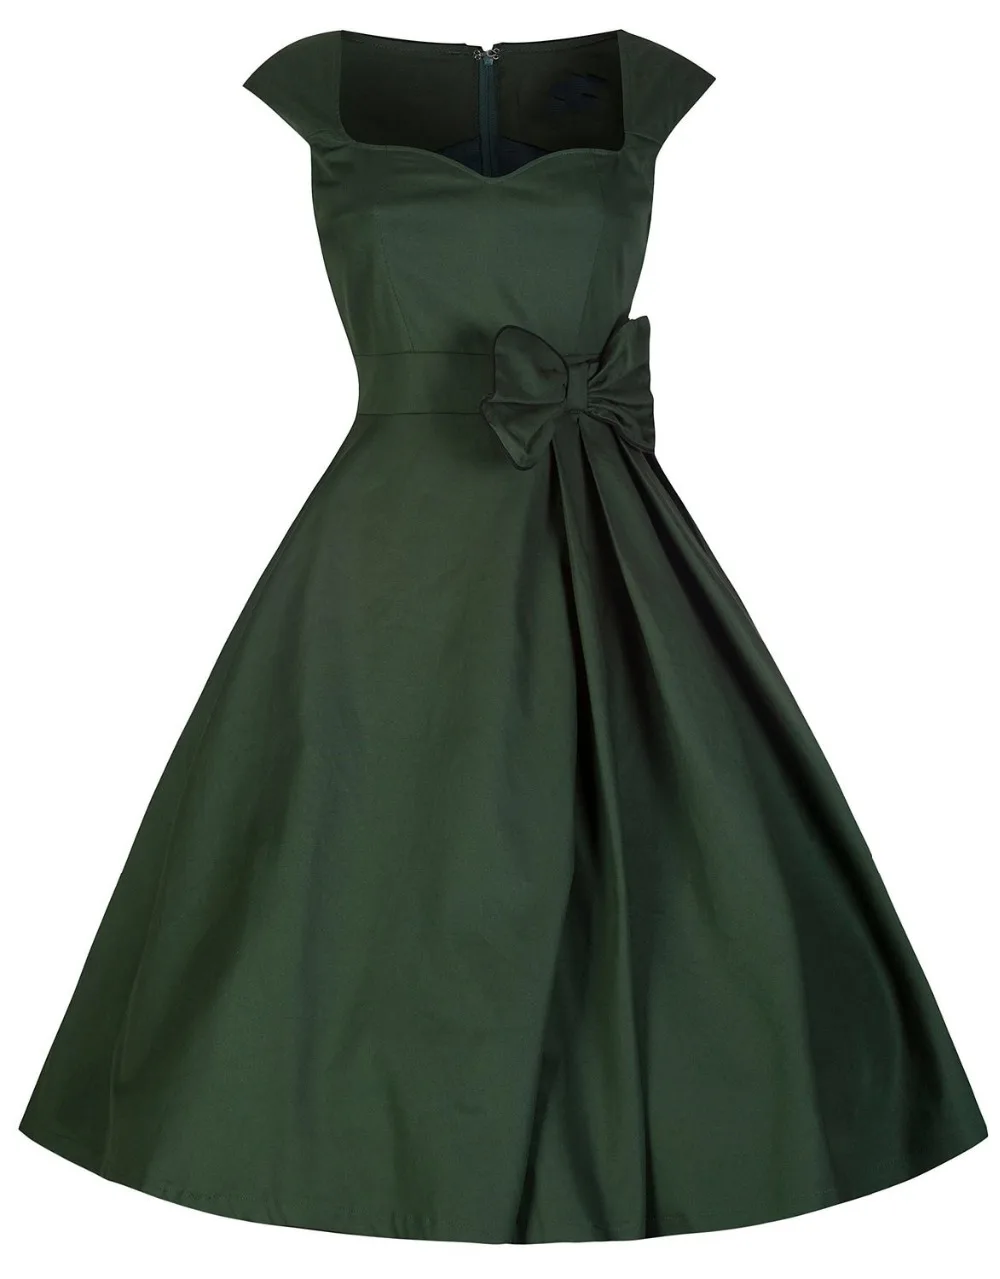 Fashion-Big-Brand-Europe-Retro-Hepburn-Style-Dress-1950s-60s-Vintage ...